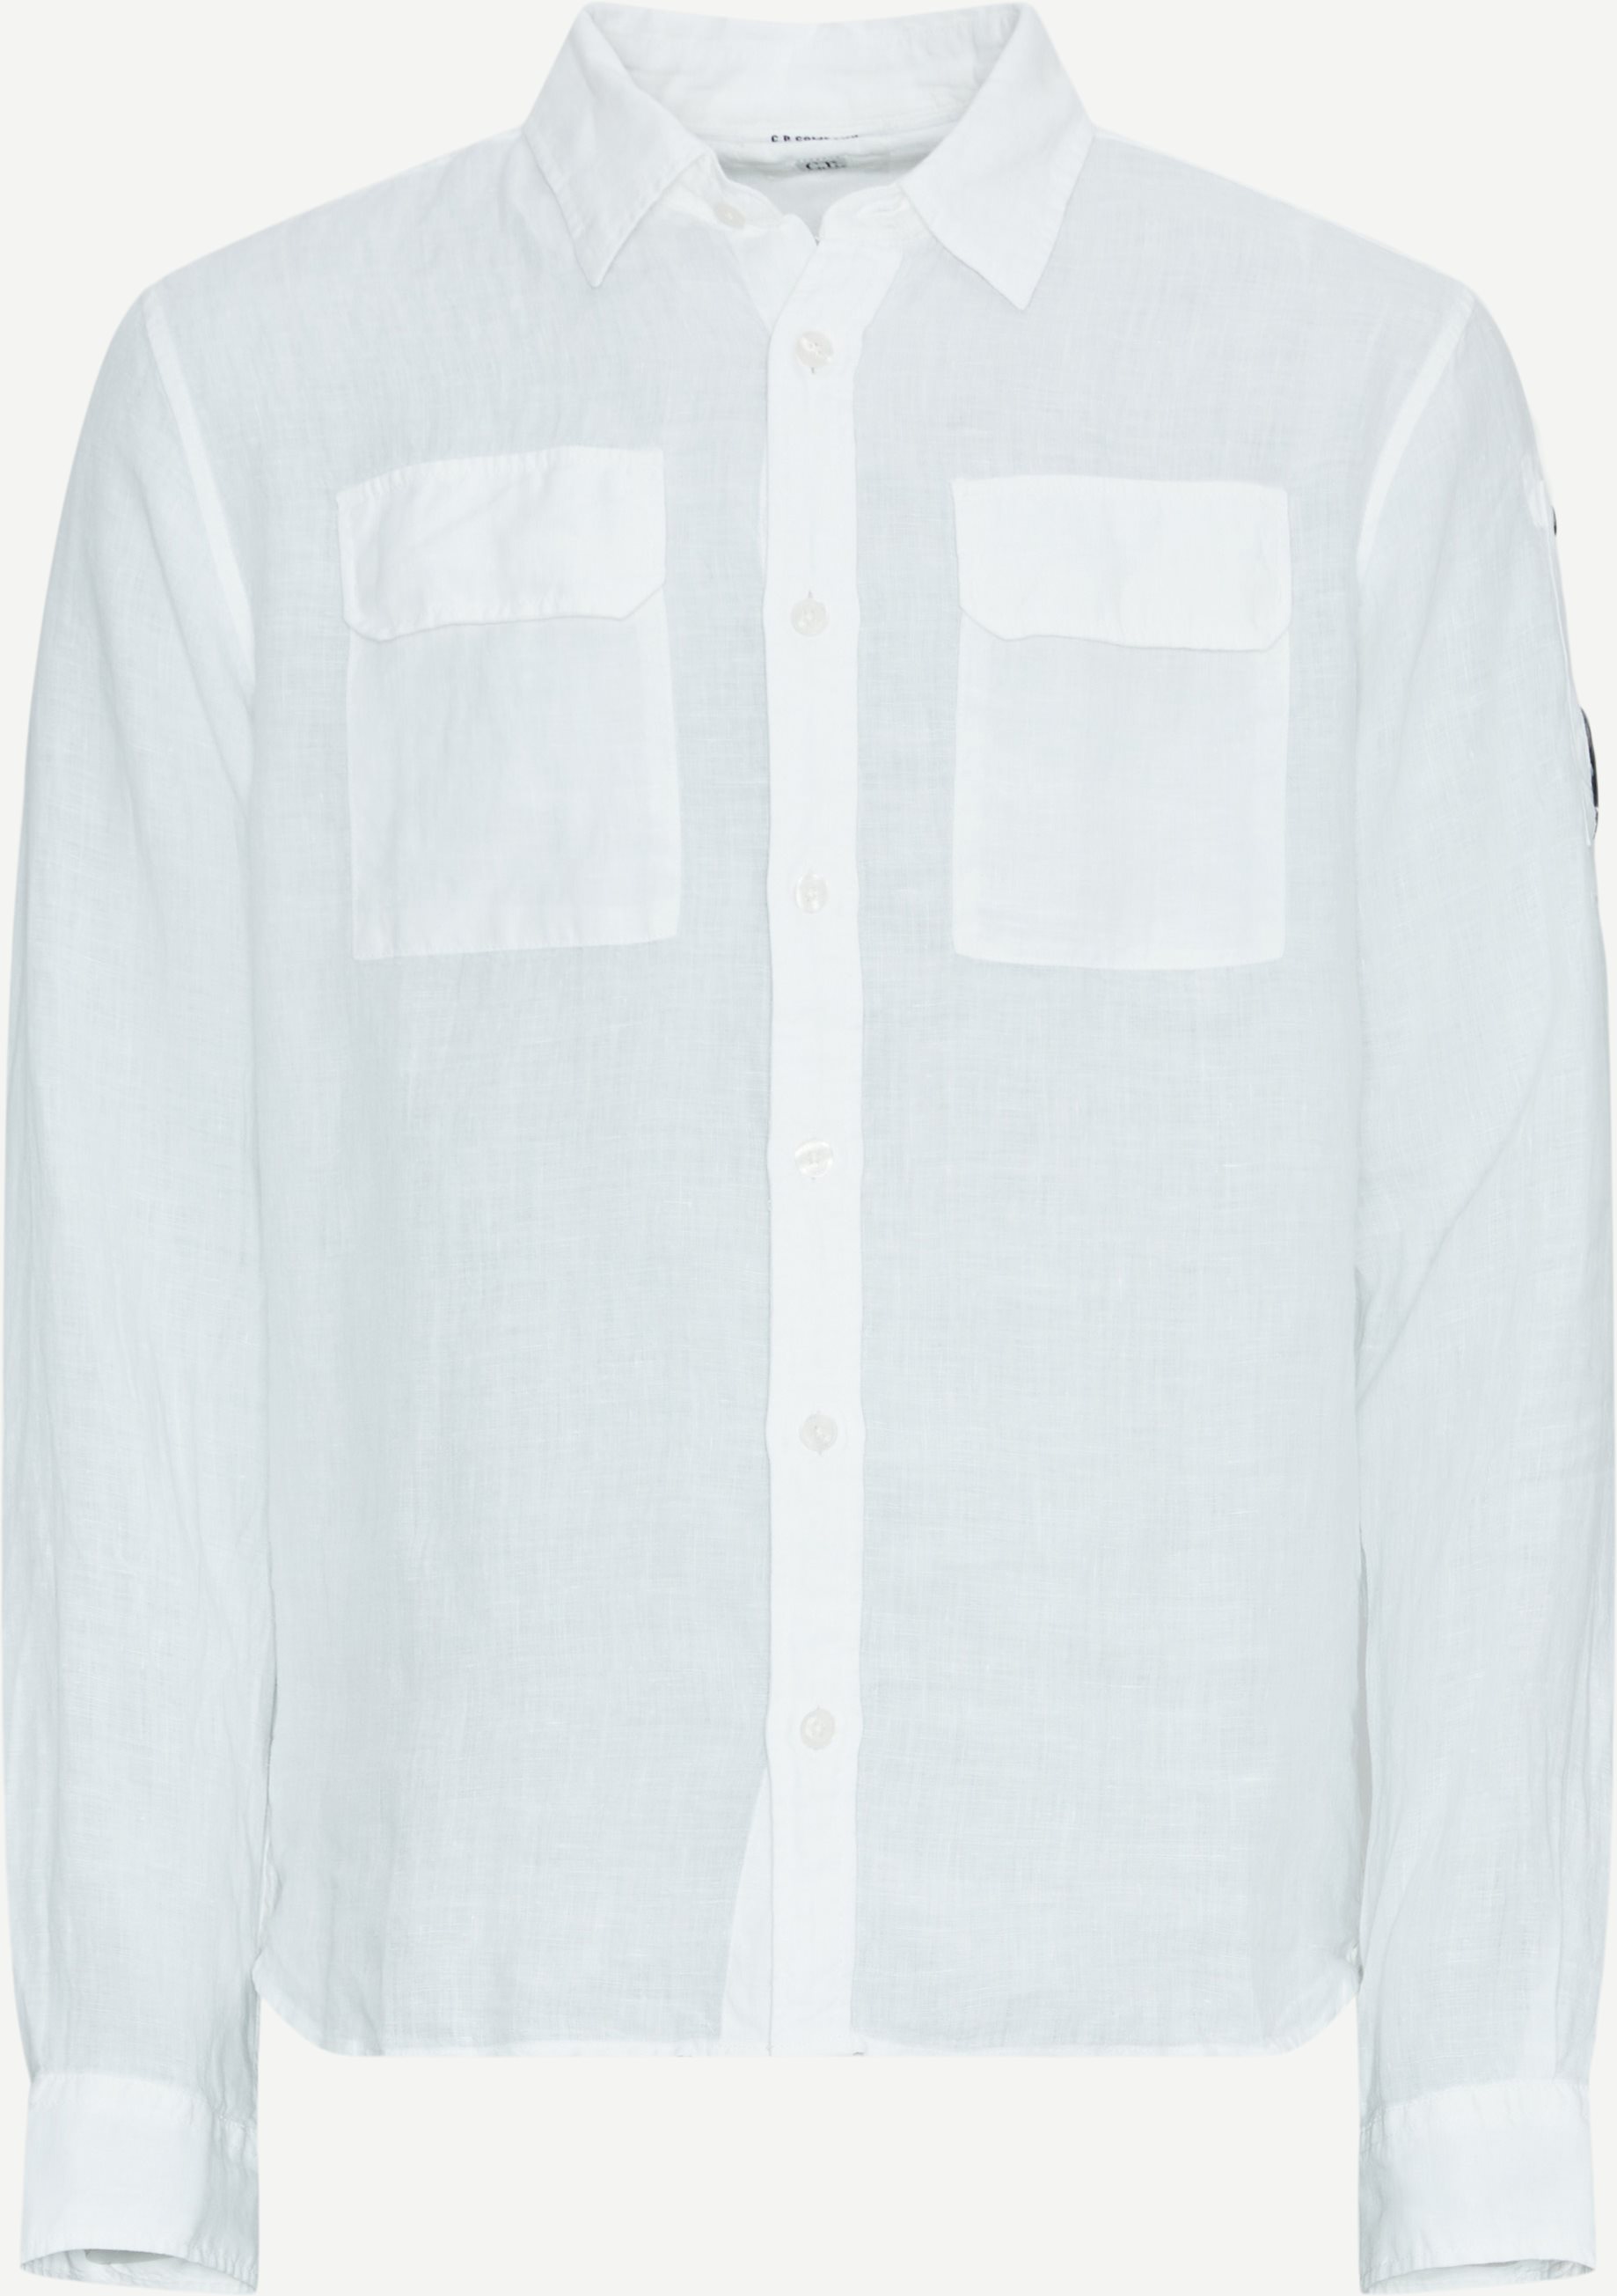 C.P. Company Shirts SH301A 005415G White